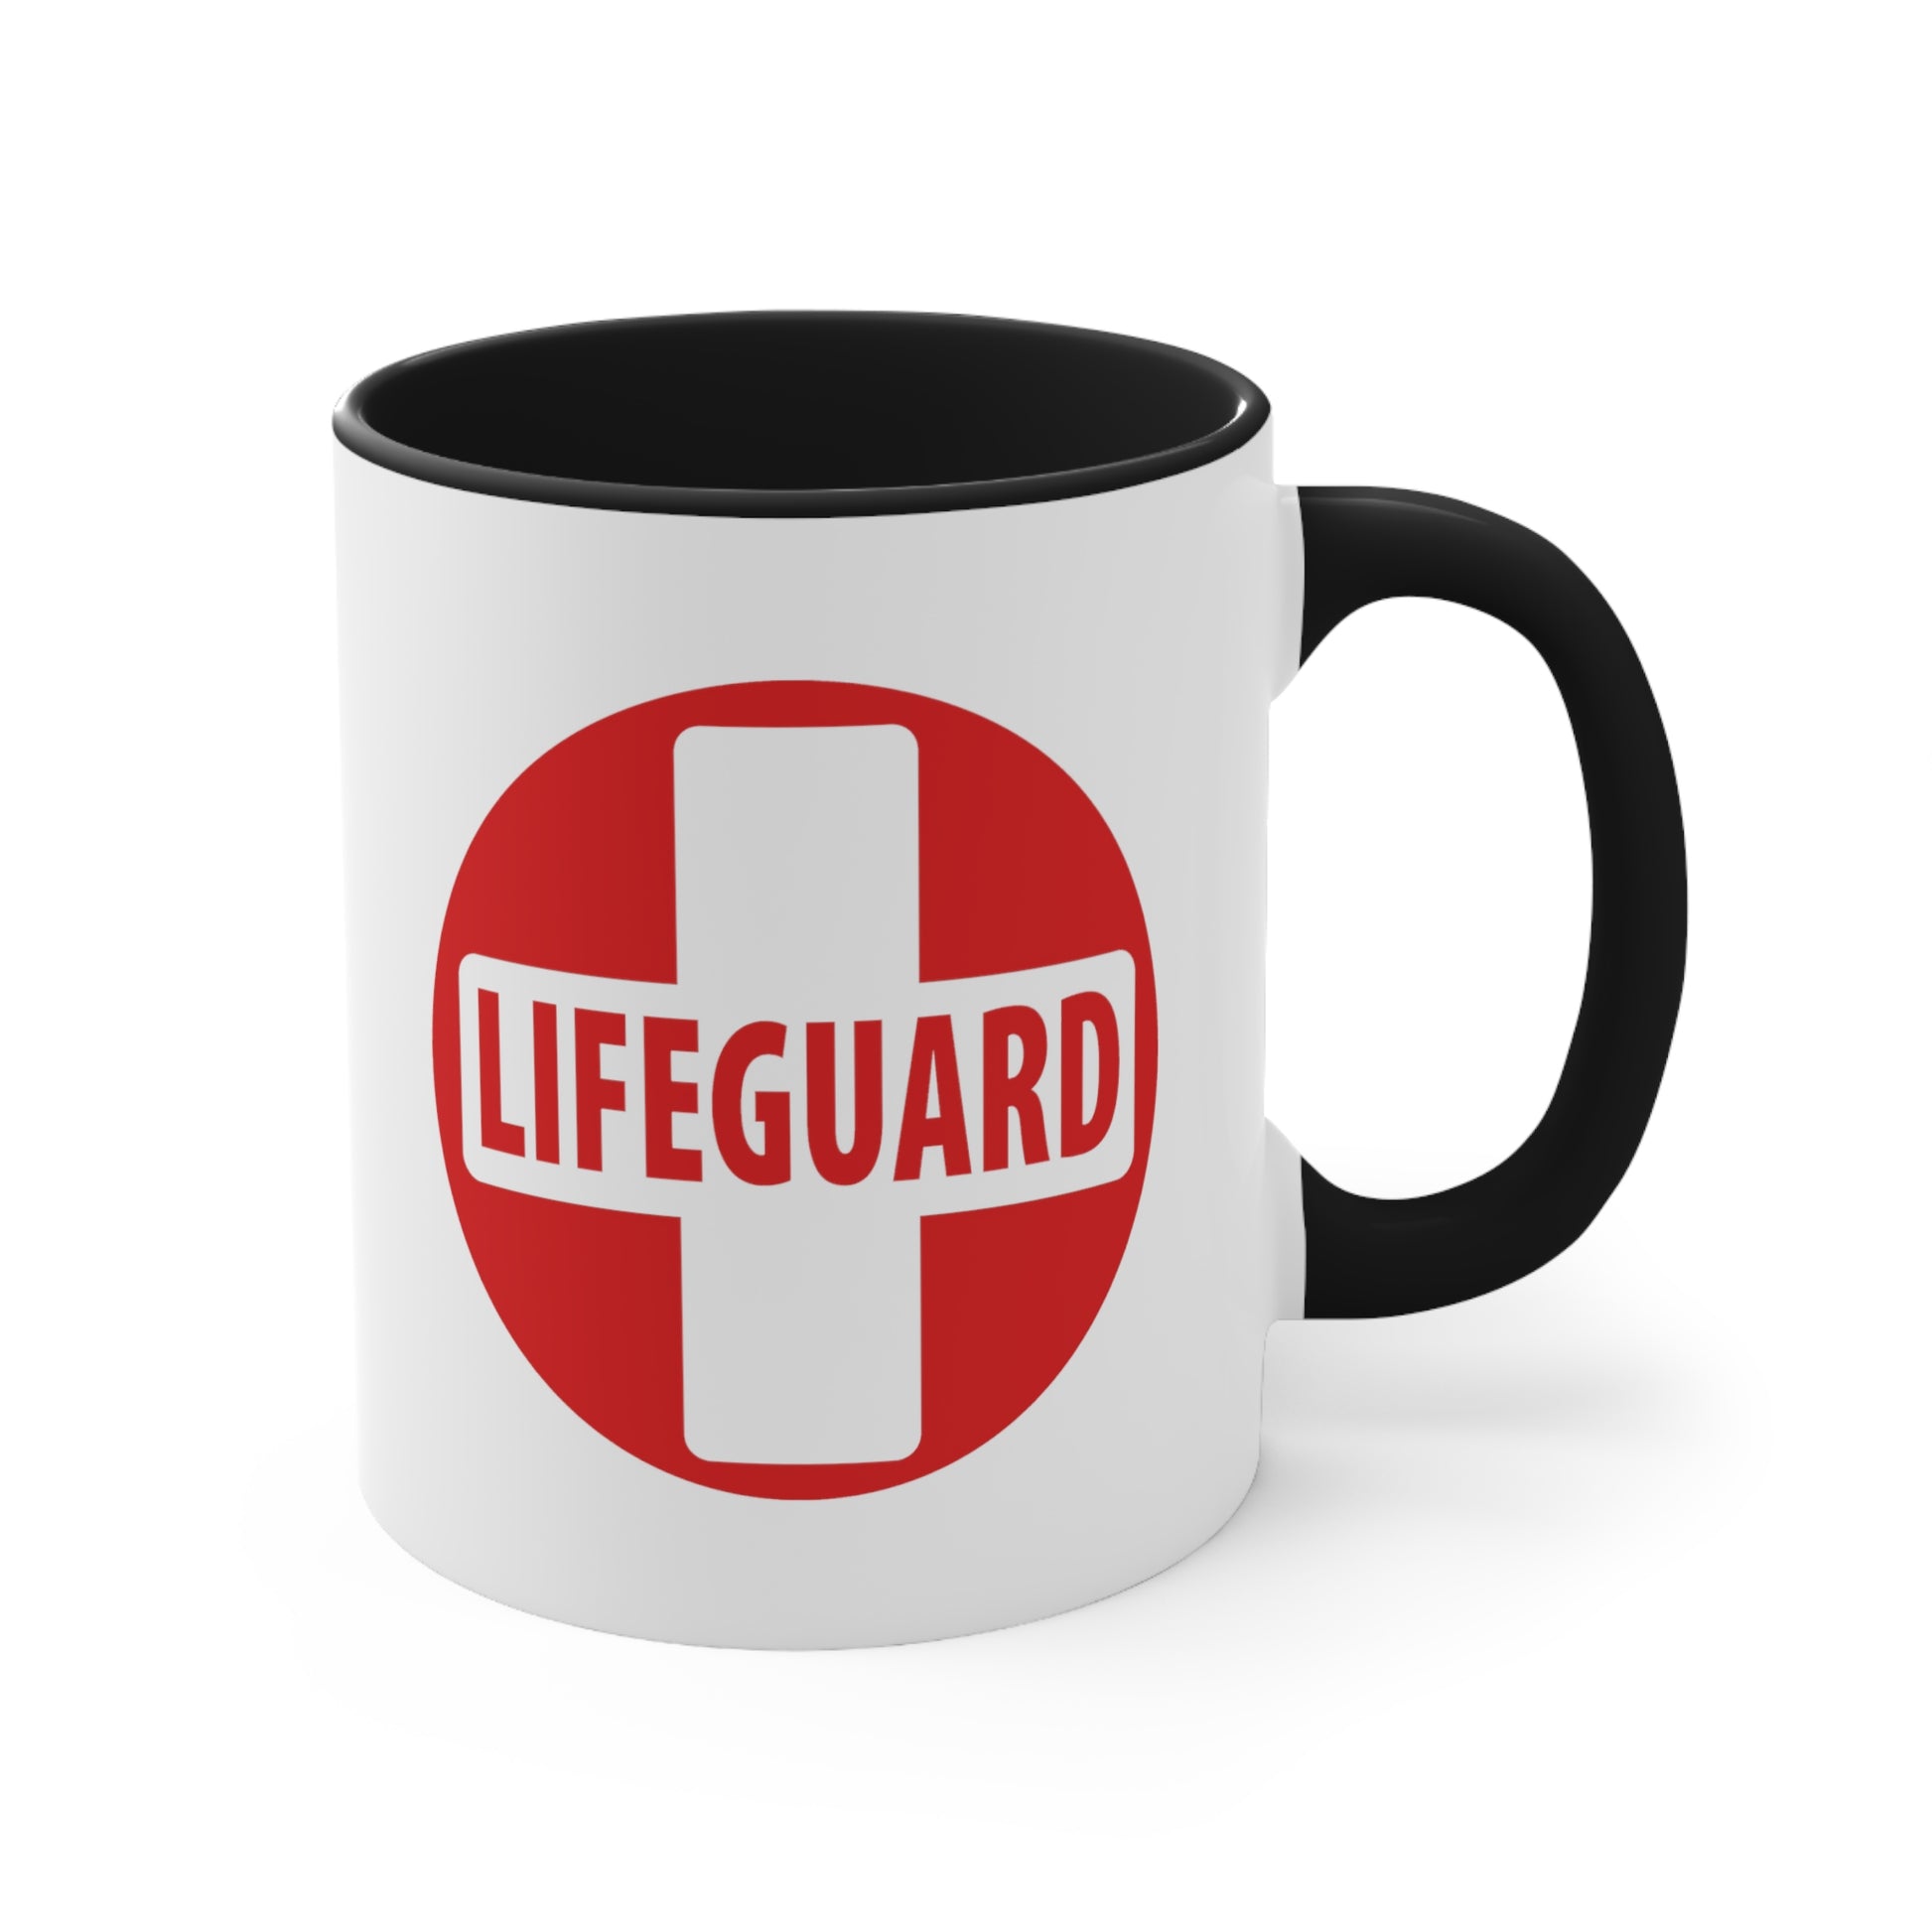 Lifeguard Coffee Mug - Double Sided Black Accent White Ceramic 11oz by TheGlassyLass.com